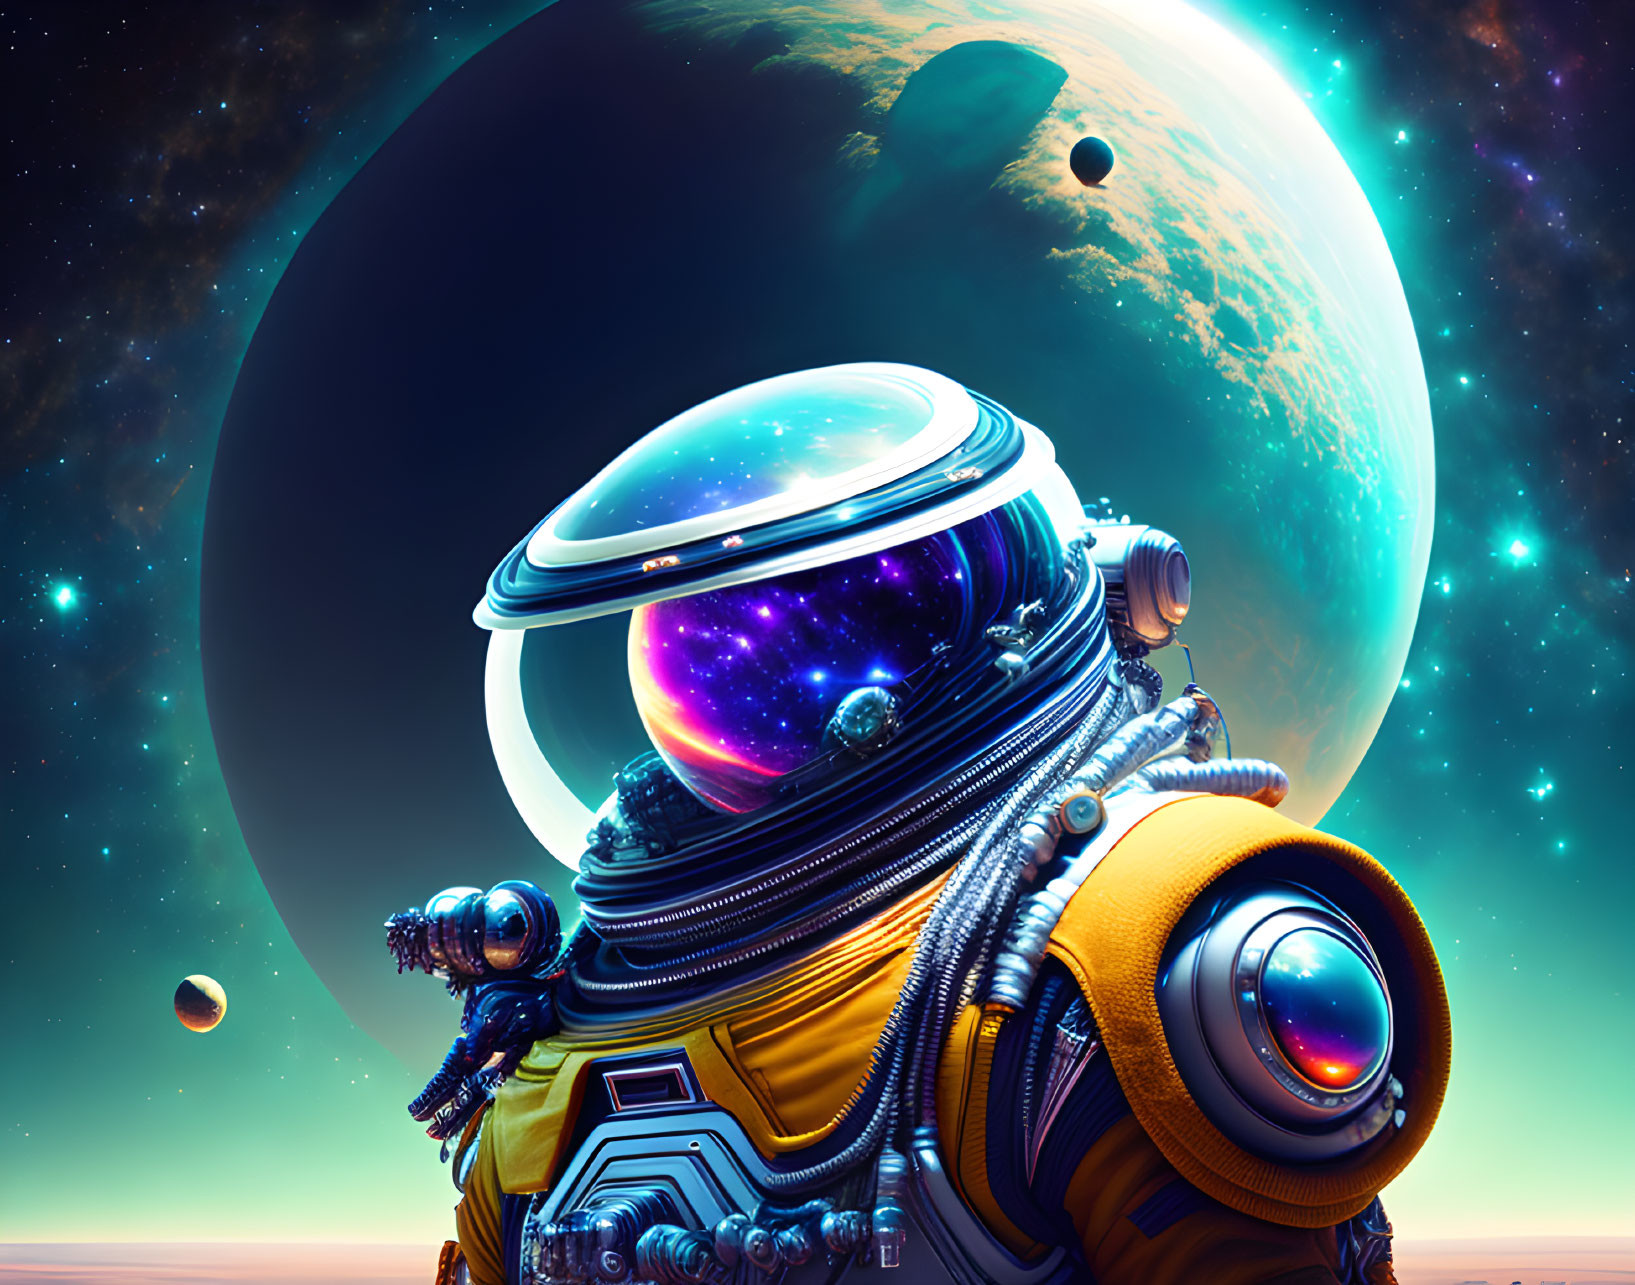 Astronaut with Reflective Visor in Cosmic Scenery